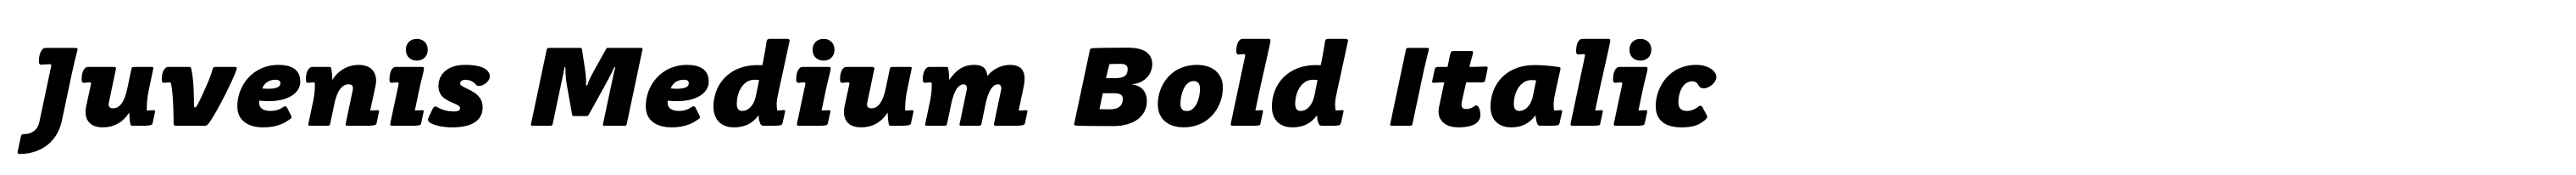 Juvenis Medium Bold Italic